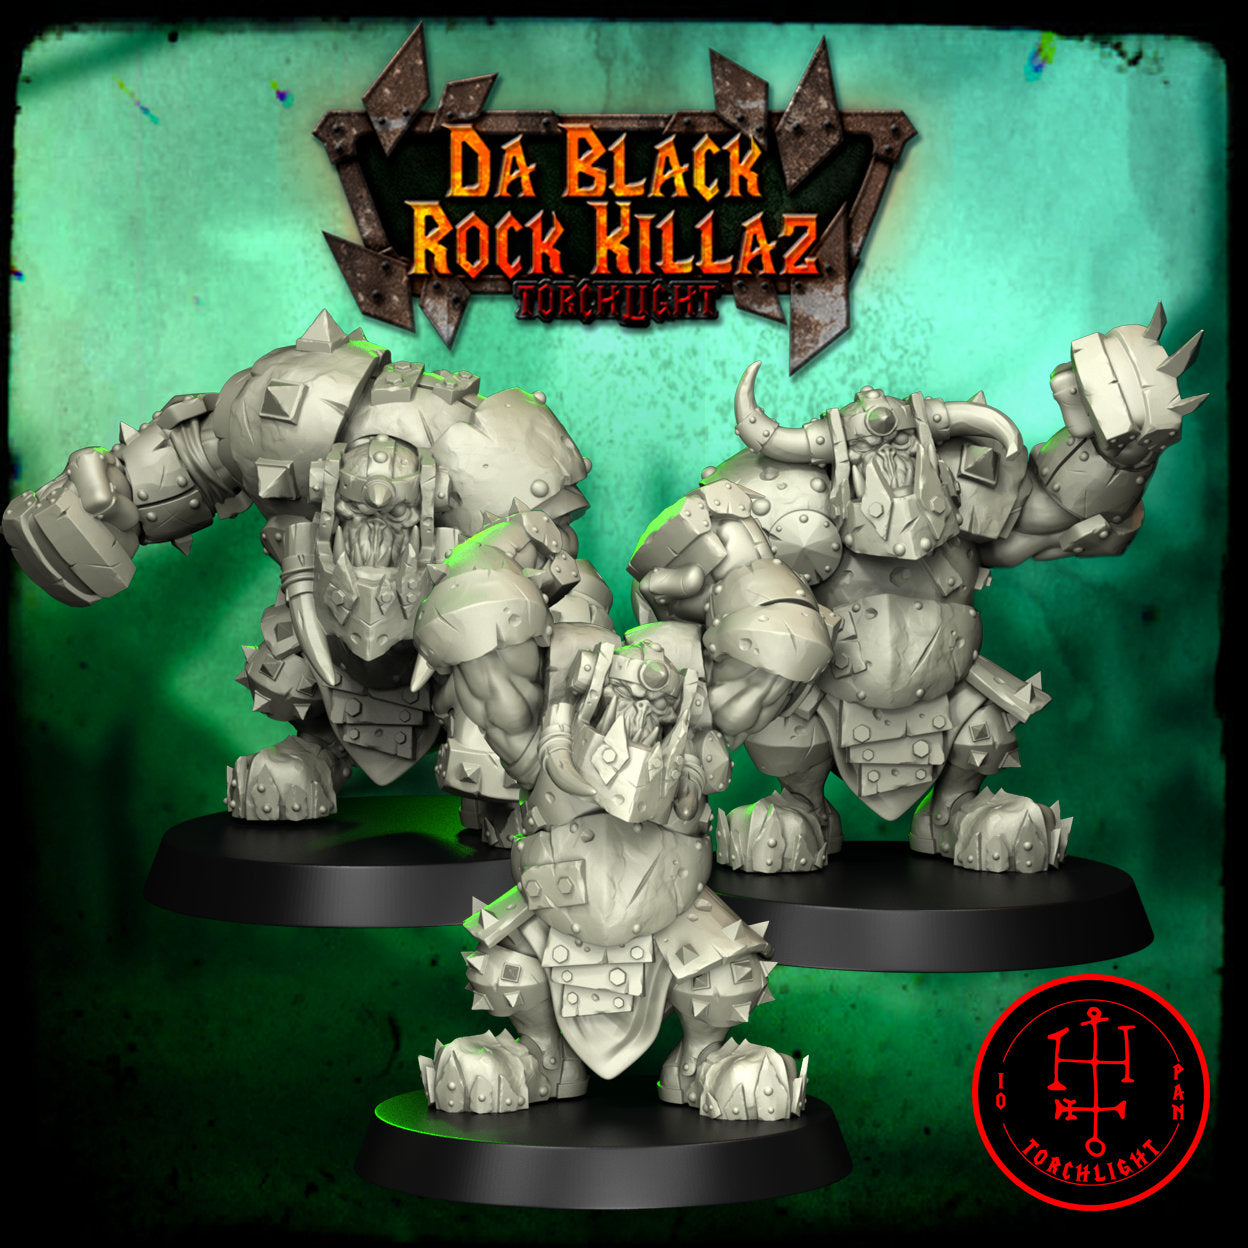 Da Black Rock Killas - Obsidian Orc Fantasy Football Team - 15 Players - Torchlight Models